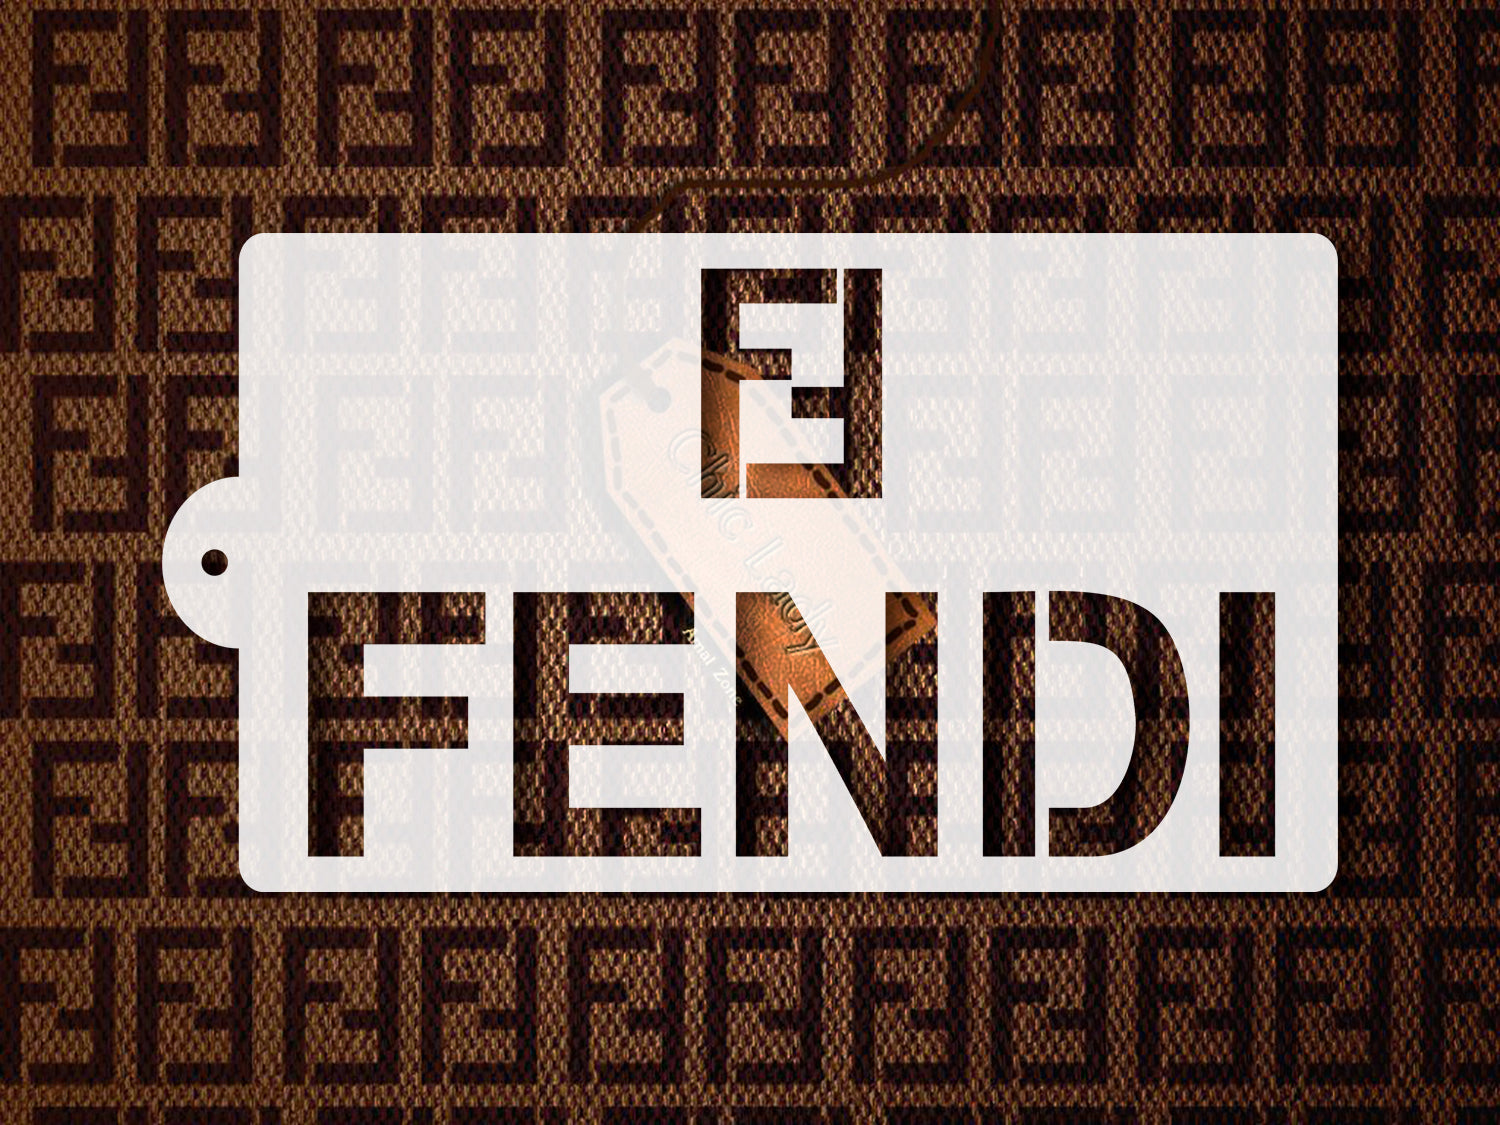 What is the Fendi symbol?